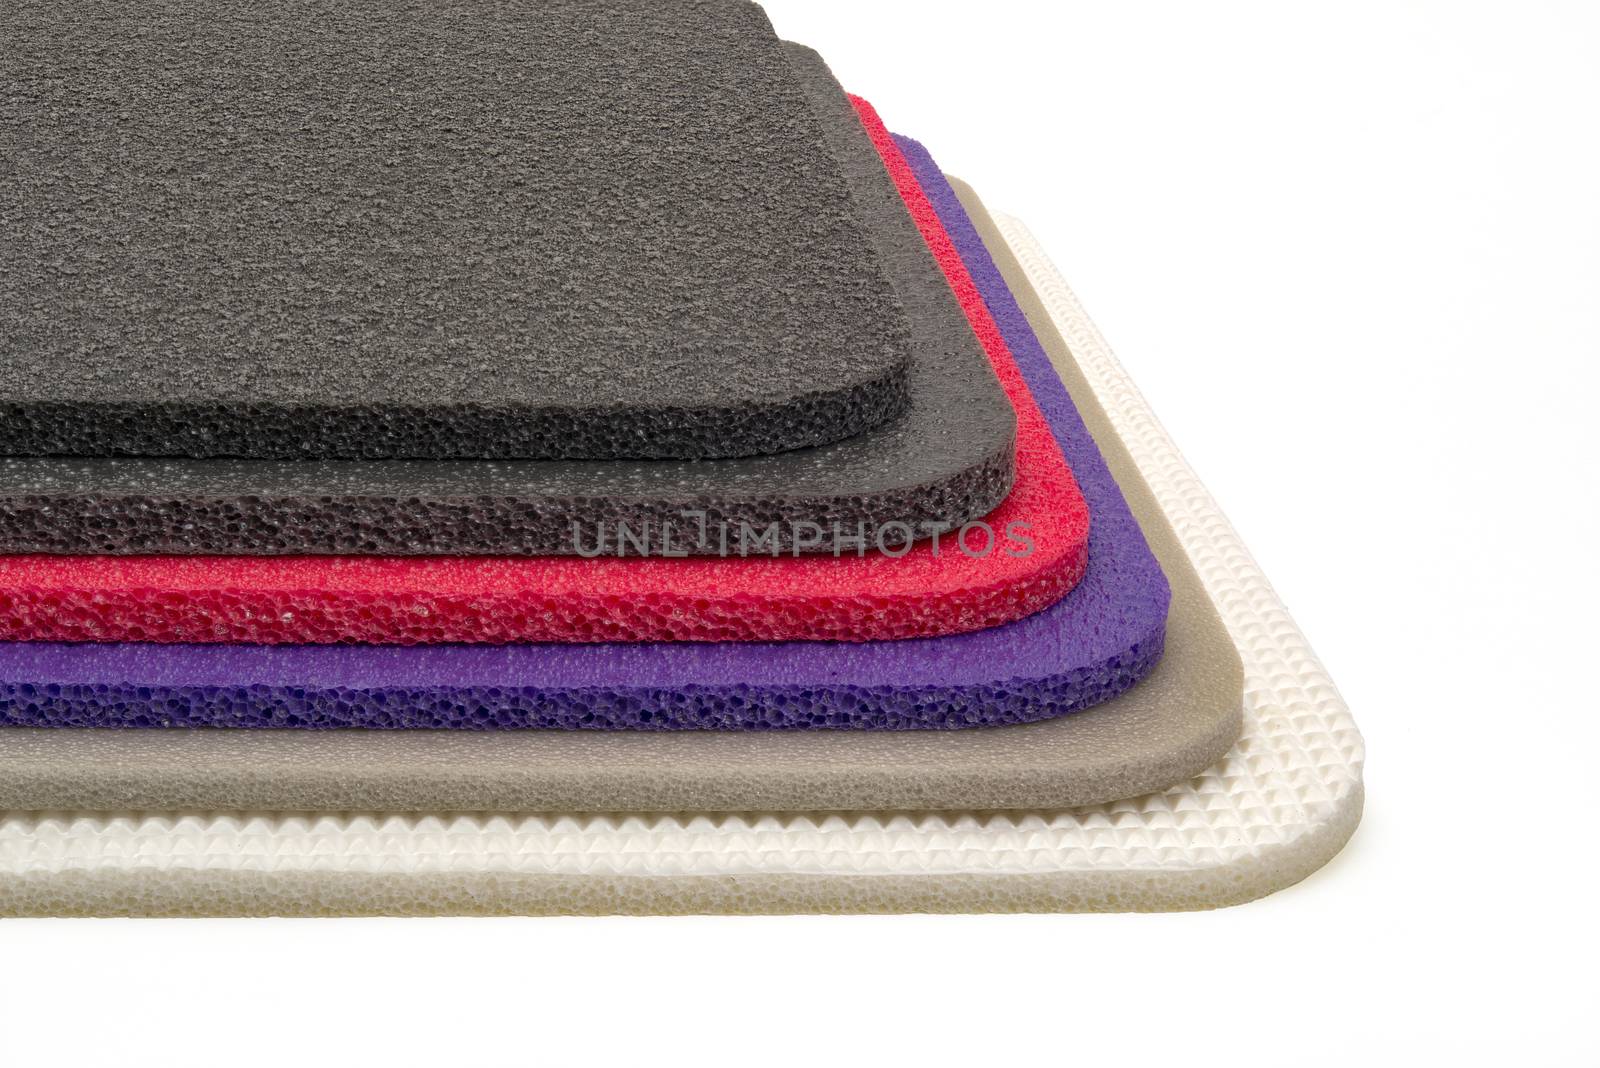 Polyethylene Foam, Multi Color Material Shockproof Closed Up by praethip